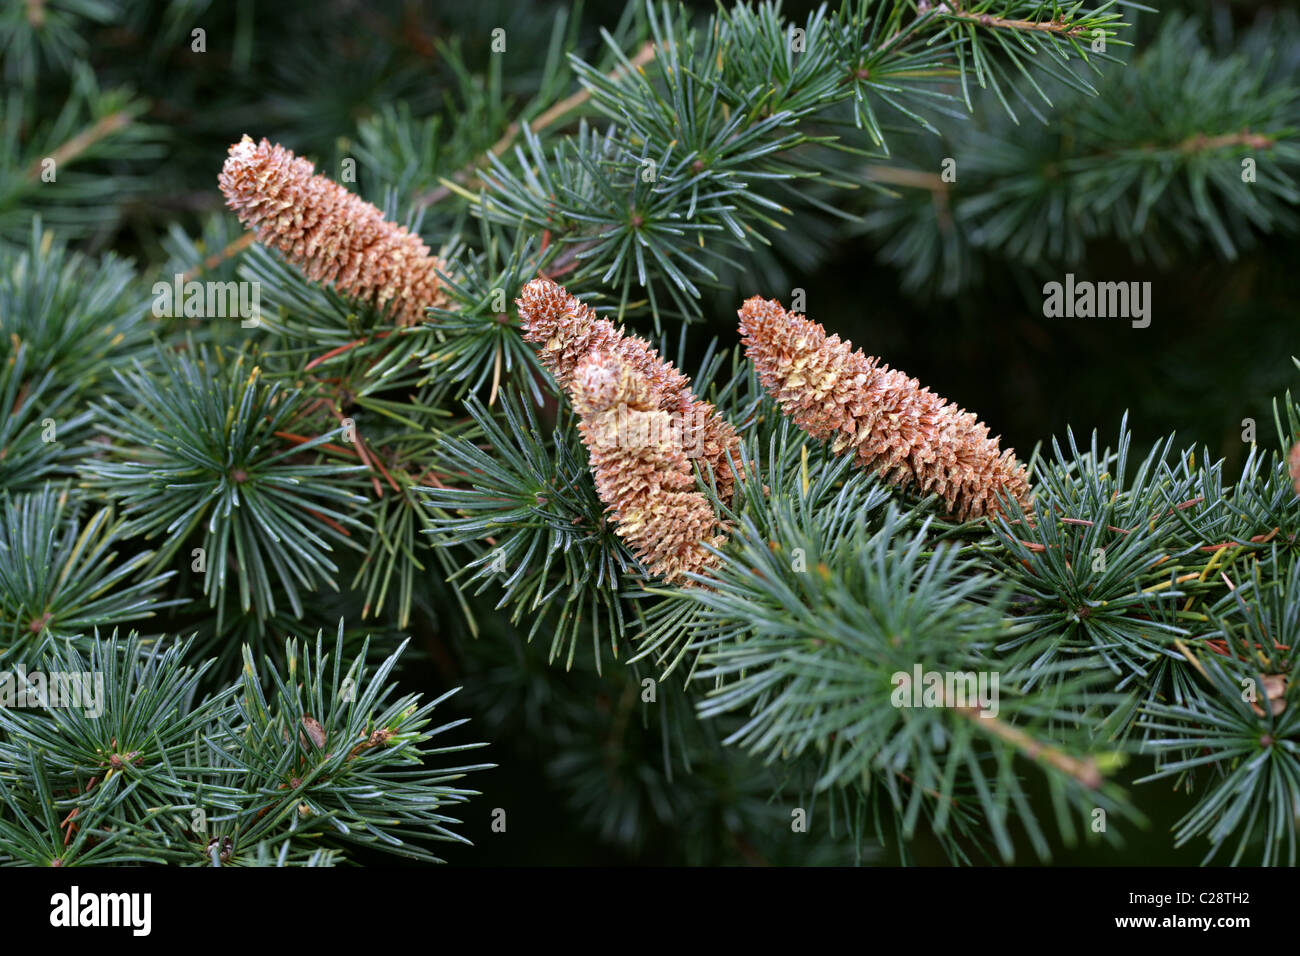 Atlas Cedar, Cedrus atlantica, Pinaceae. Male Pollen Cones. Atlas Mountains, Algeria and Morocco, North Africa. Stock Photo